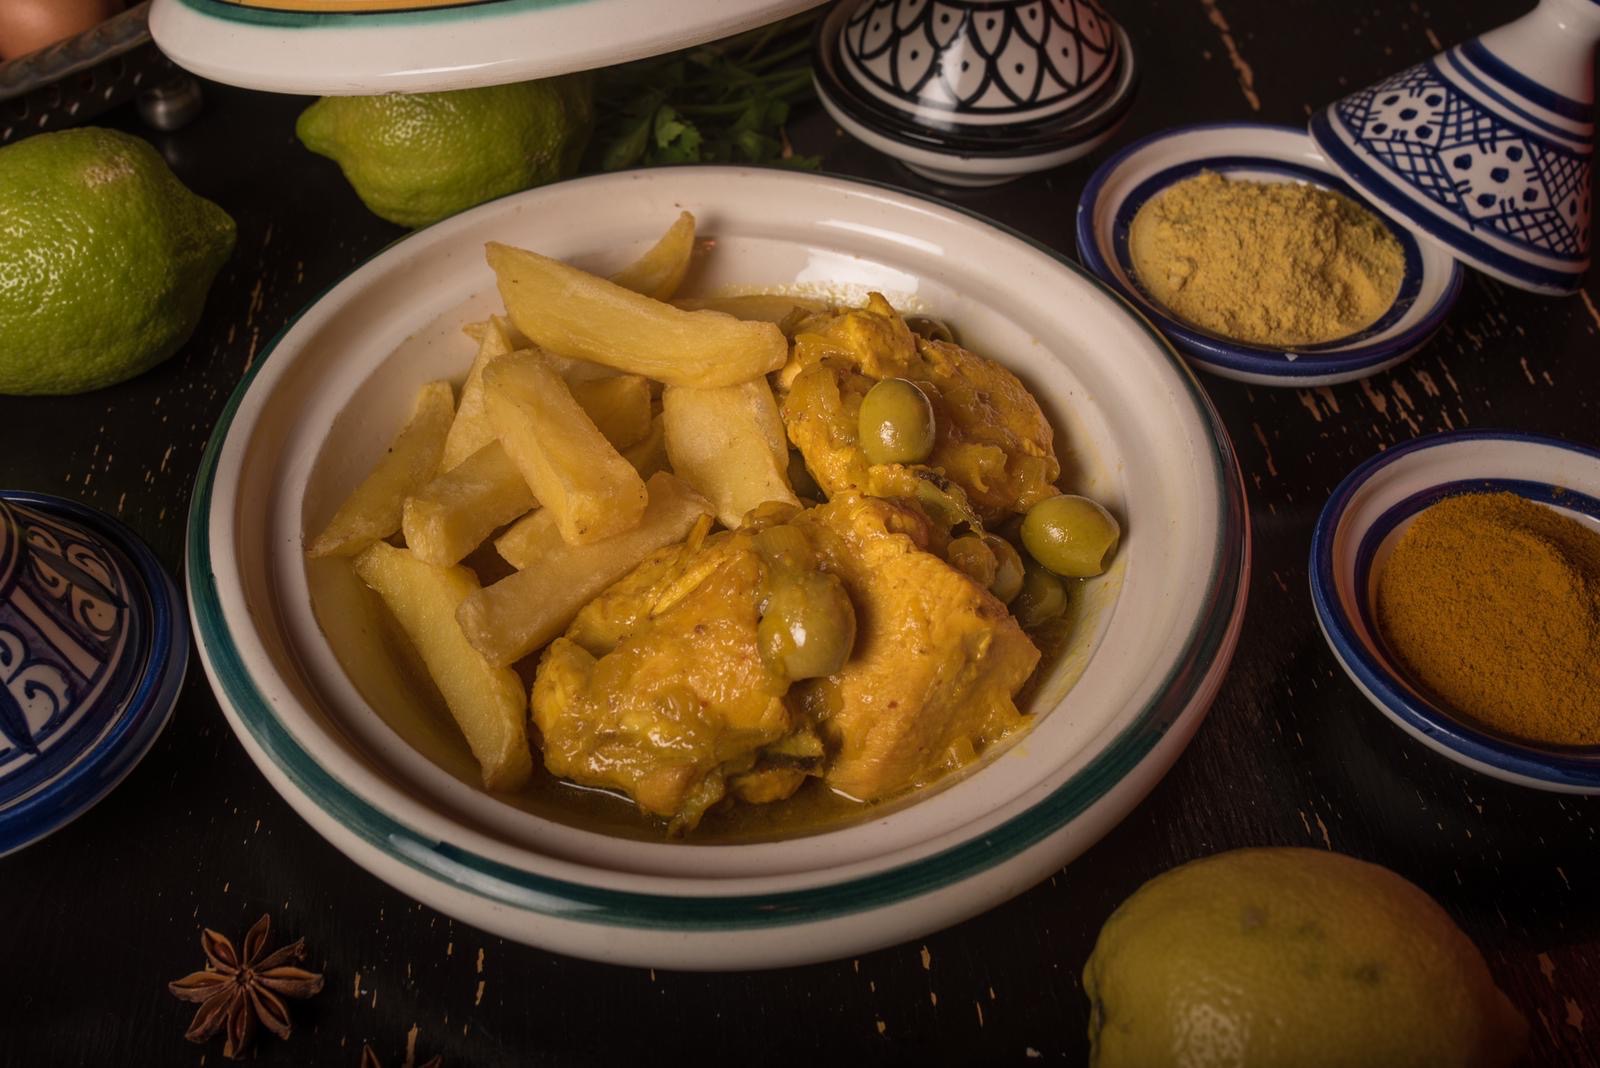 Lemon Chicken Tajine (with home fries or grits)